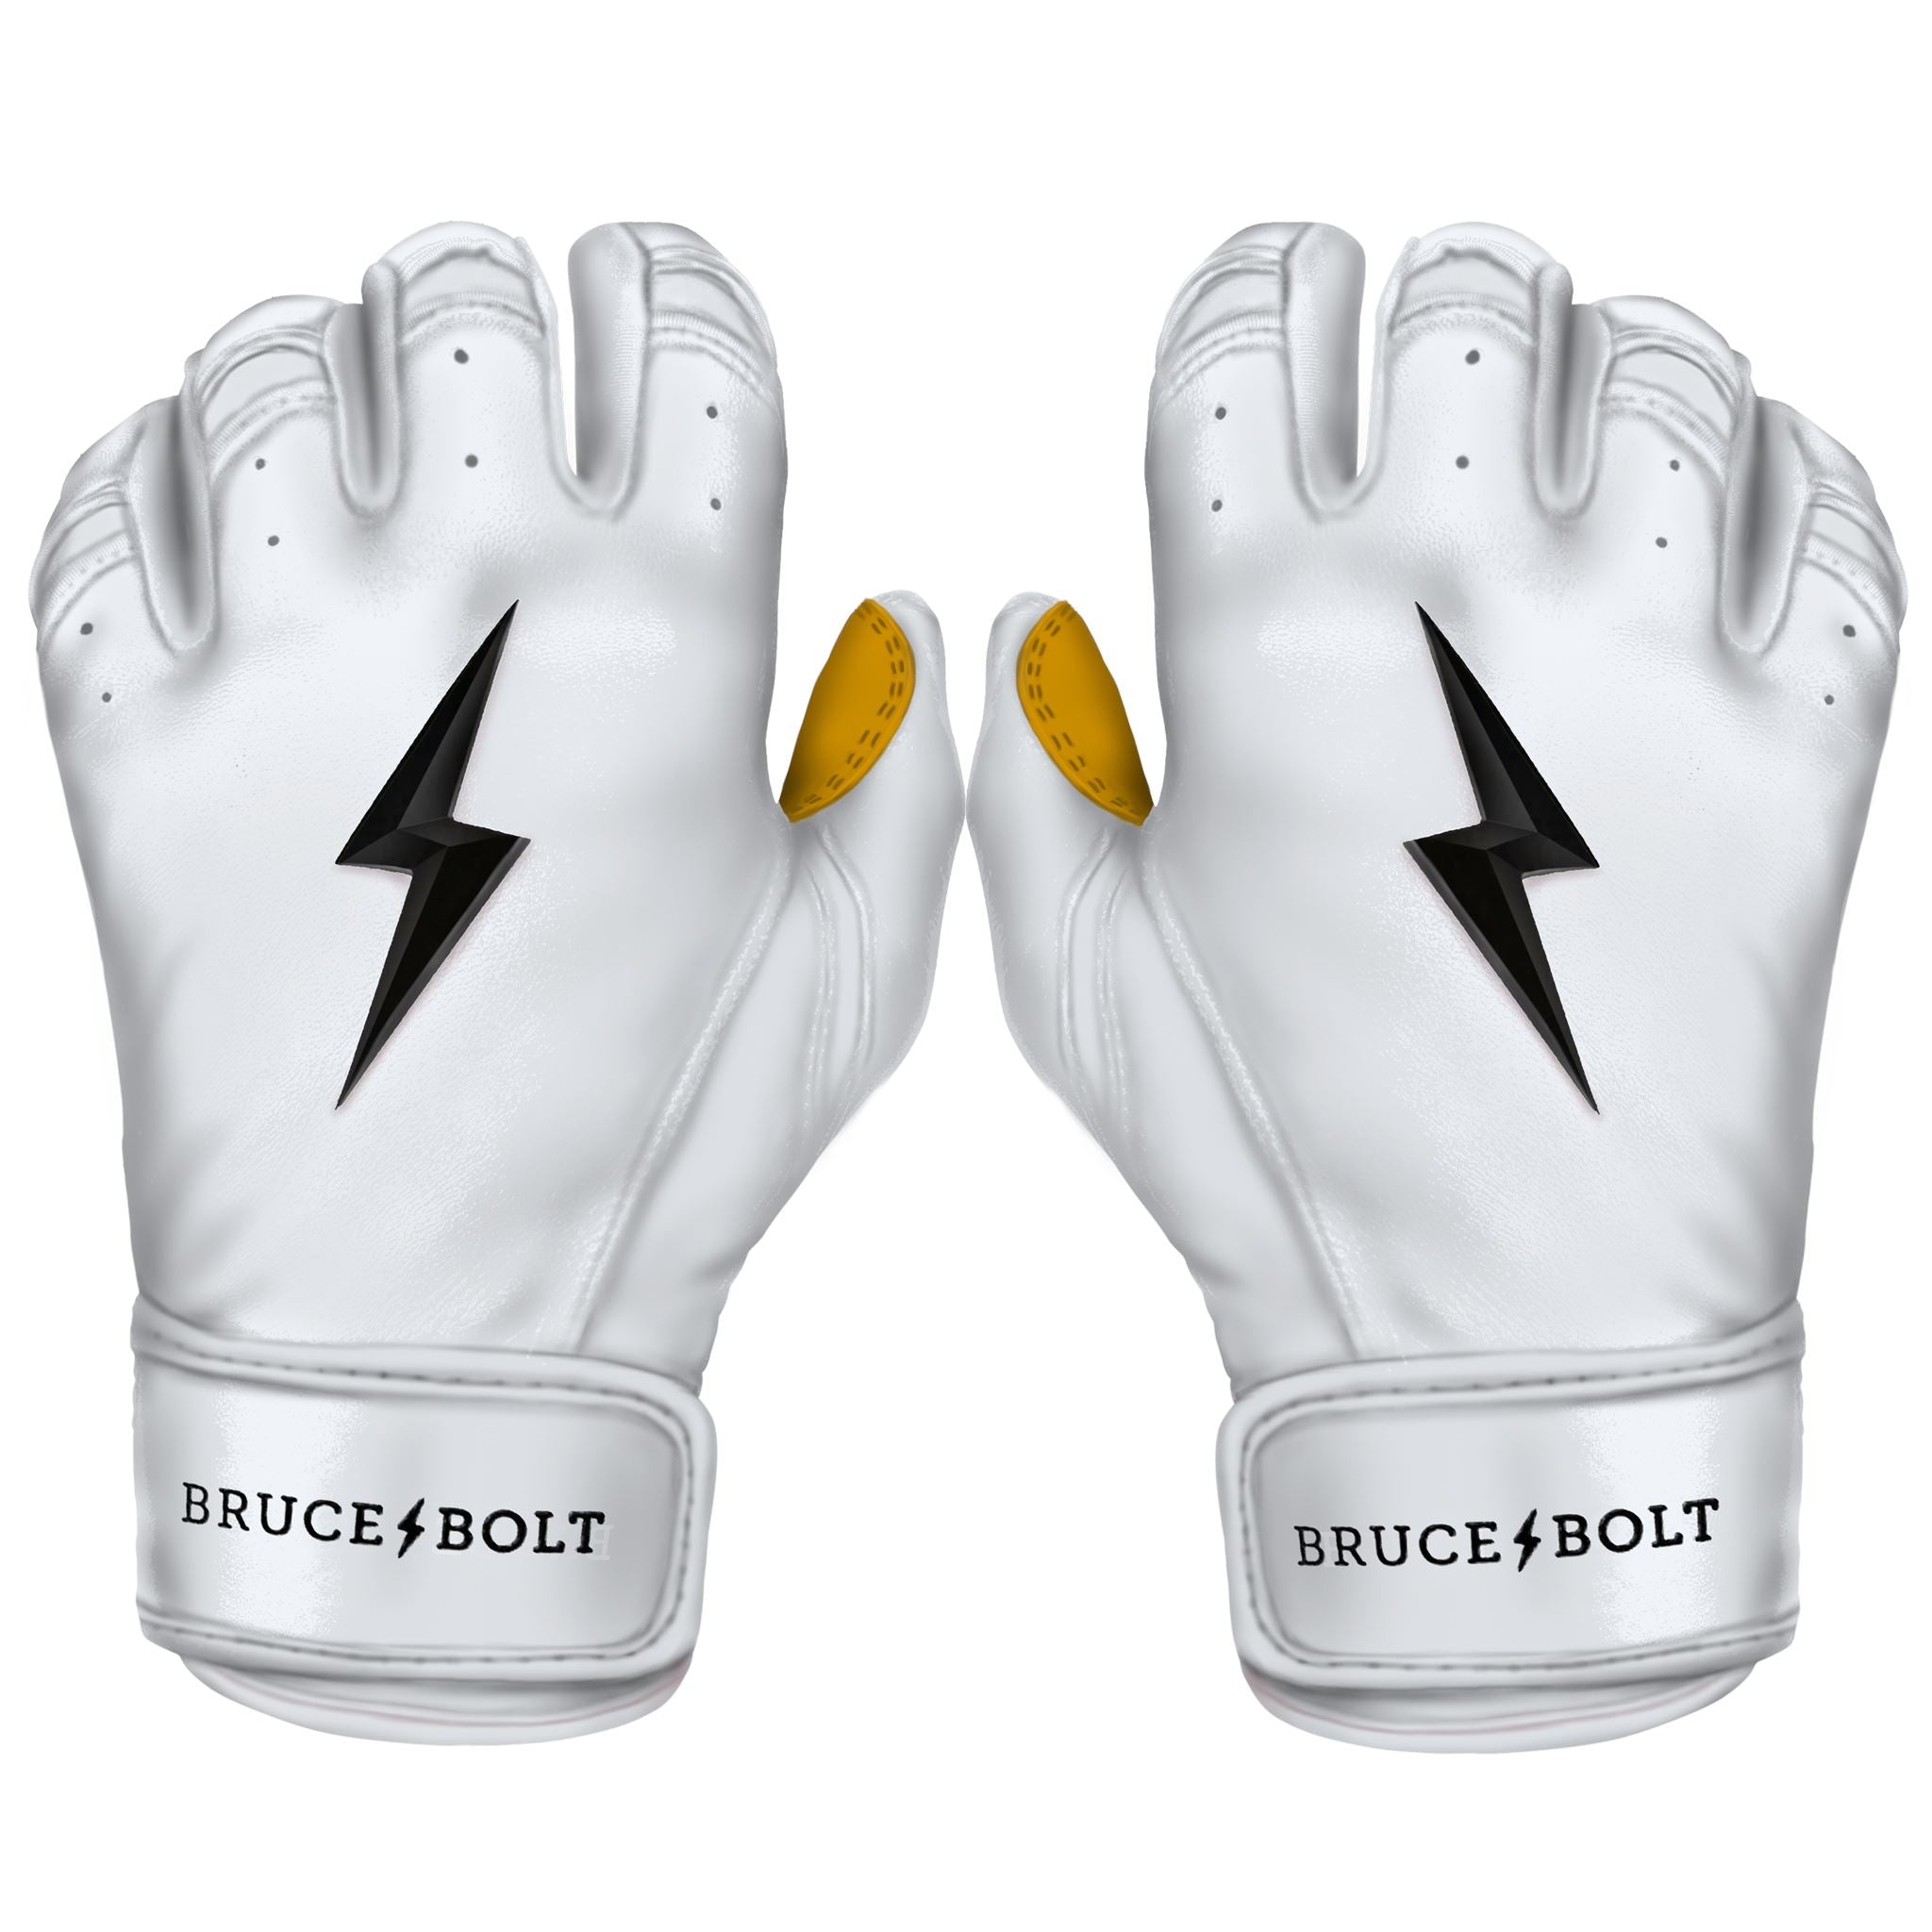 Bruce Bolt Batting Gloves Adult Medium (BRAND NEW) for Sale in